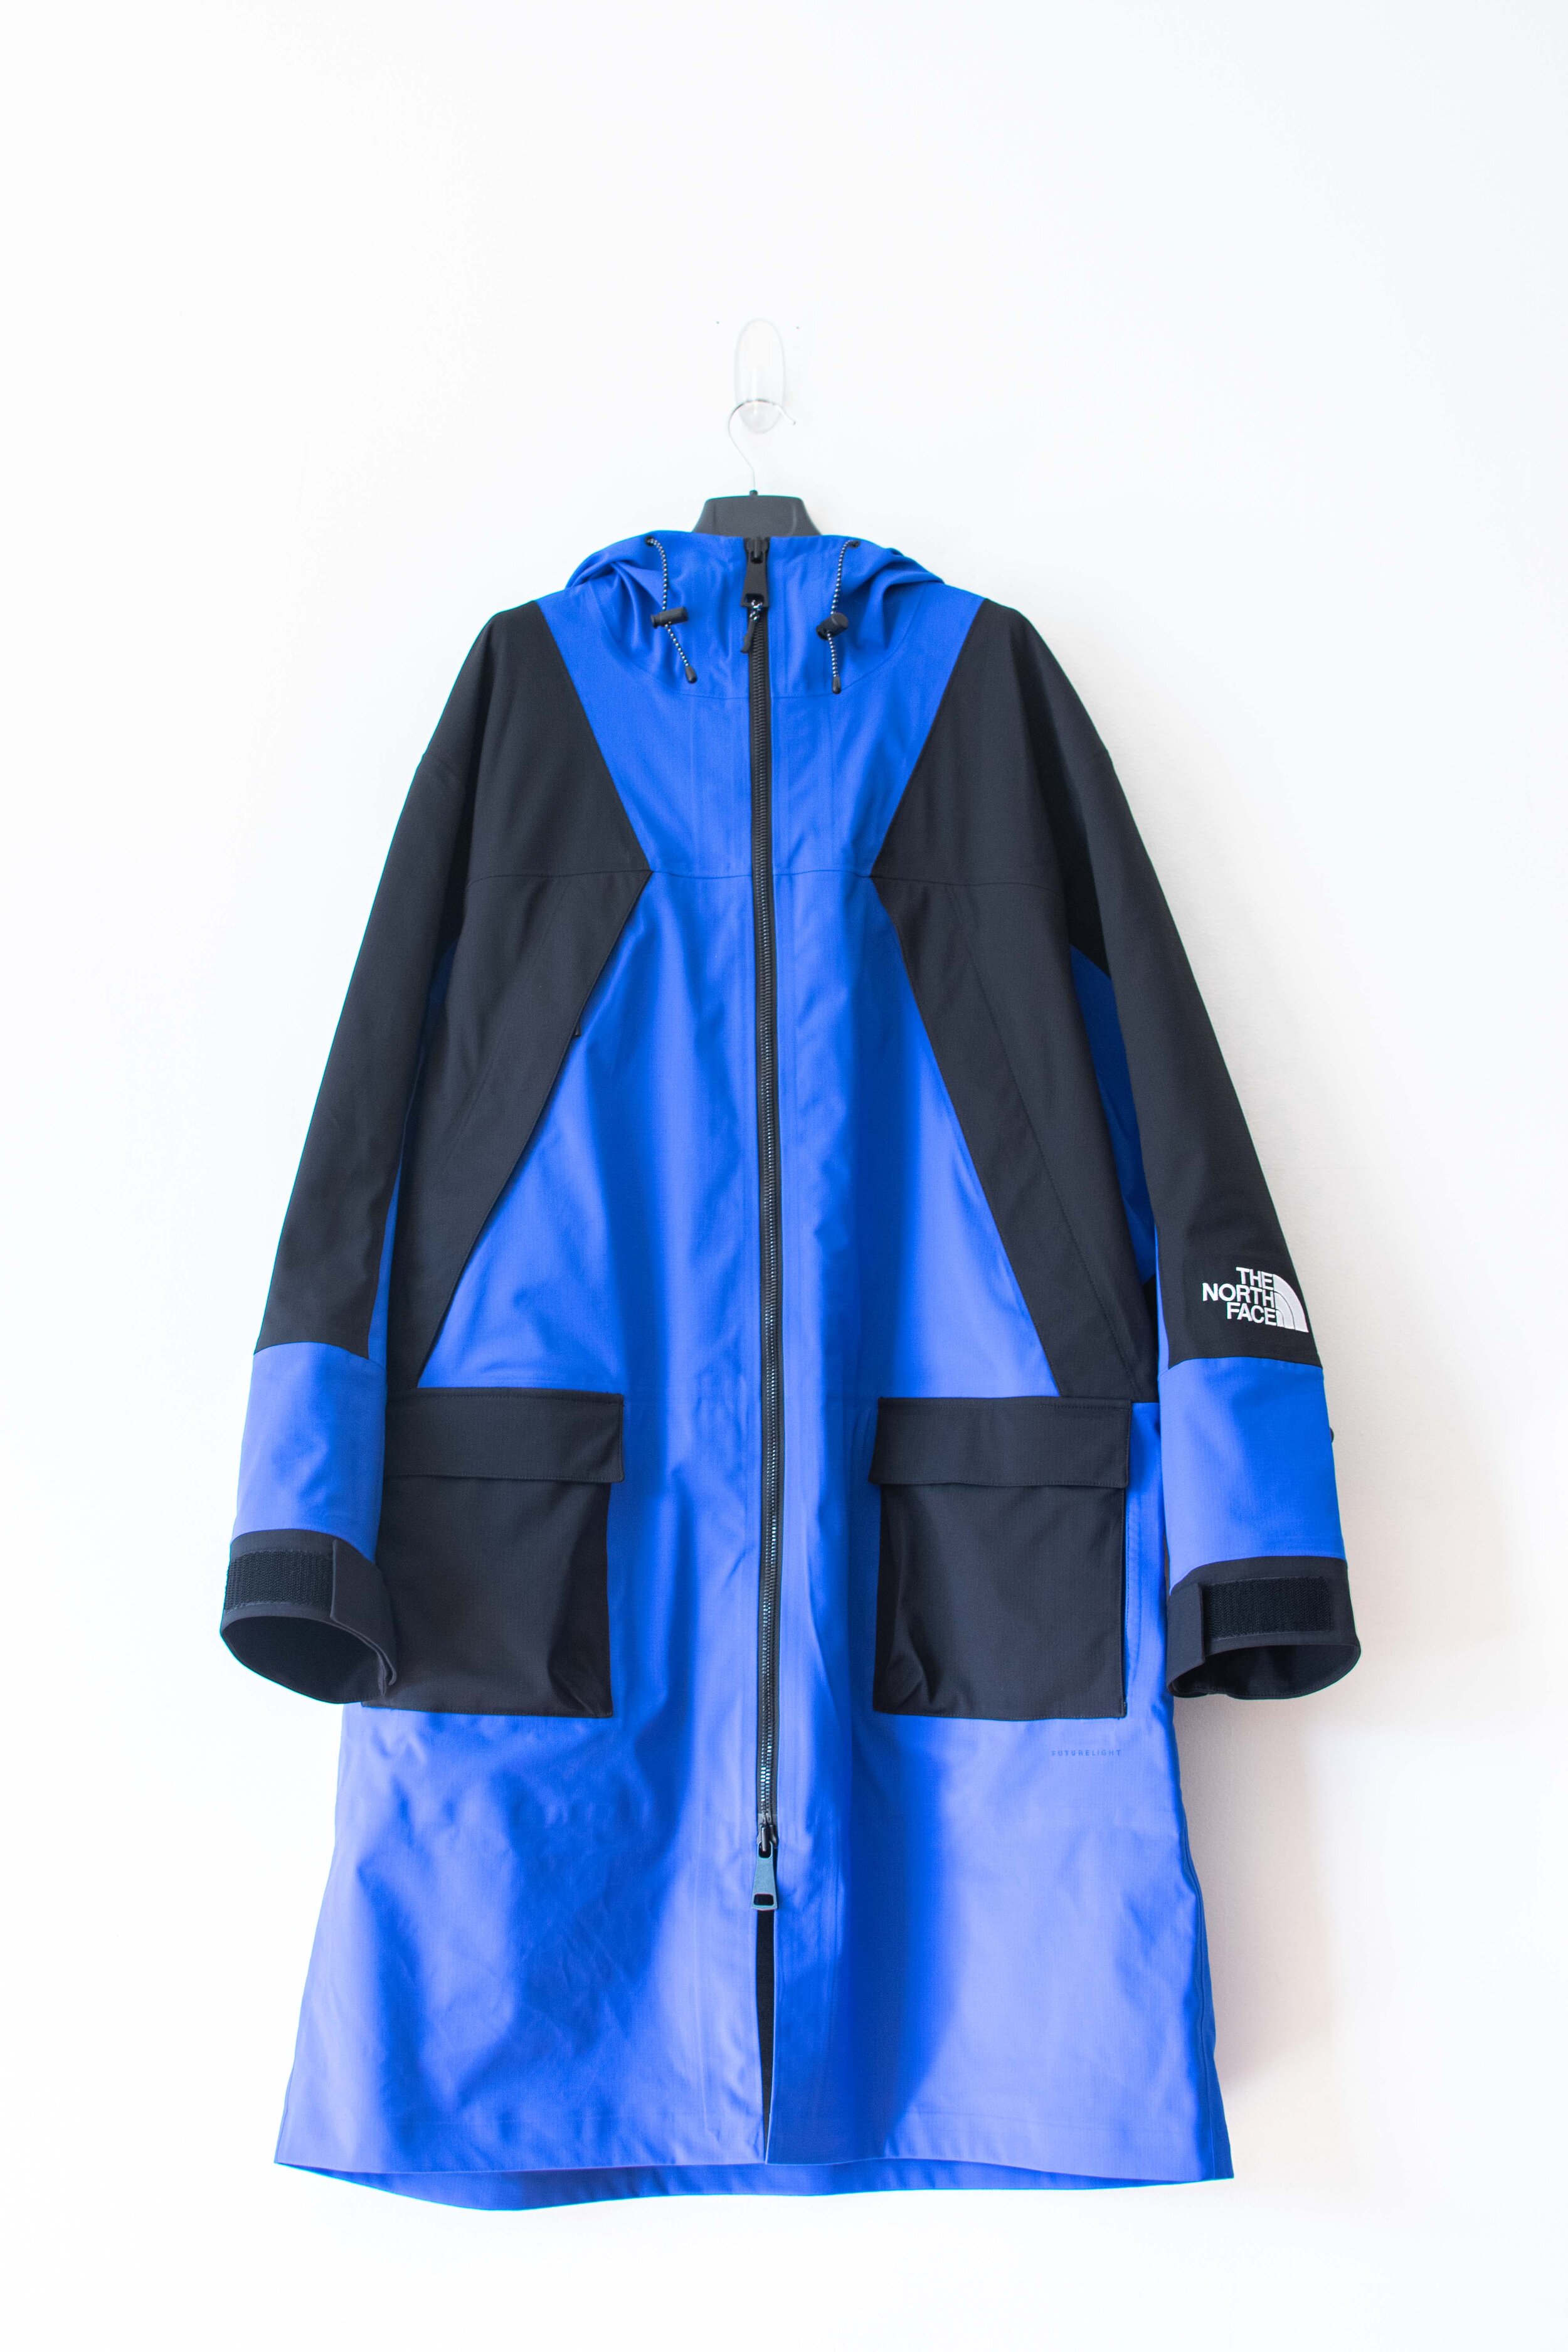 Review: North Face Black Series Mountain Light Coat FUTURELIGHT 